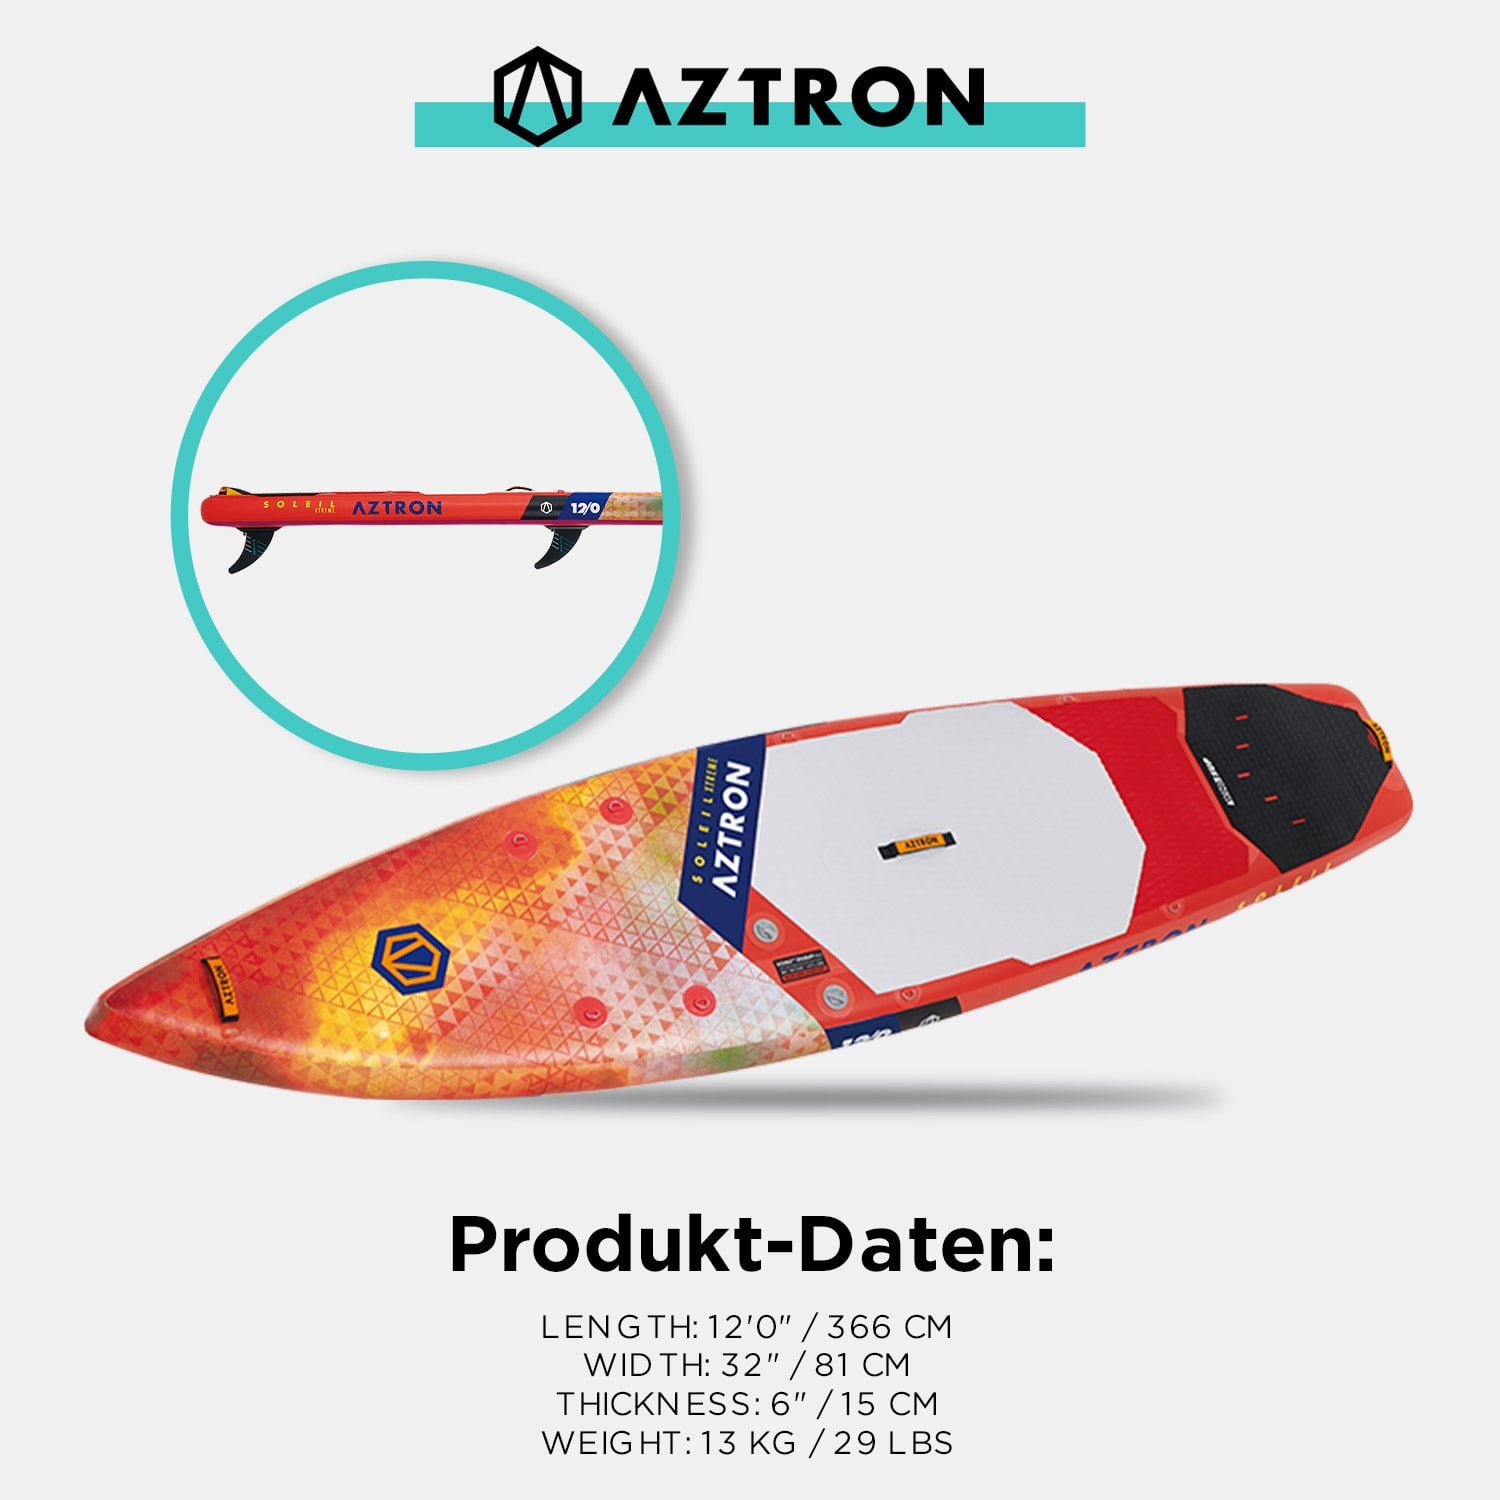 AZTRON Soleil Xtreme Windsurf Touring 12'0" iSUP Set, 366x81x15cm, Volumen 325L